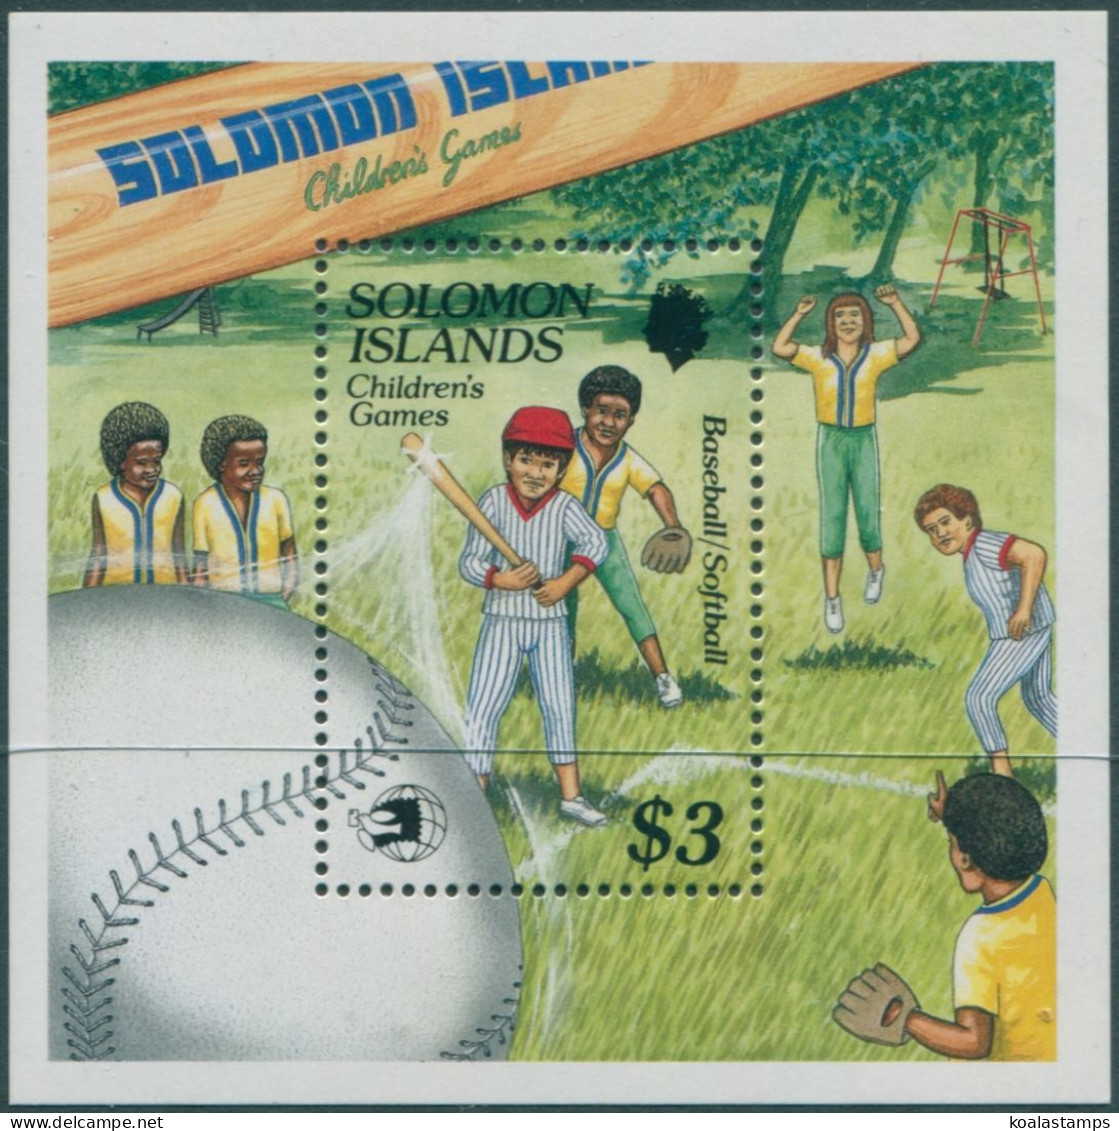 Solomon Islands 1989 SG661 Childrens Games MS MNH - Solomon Islands (1978-...)